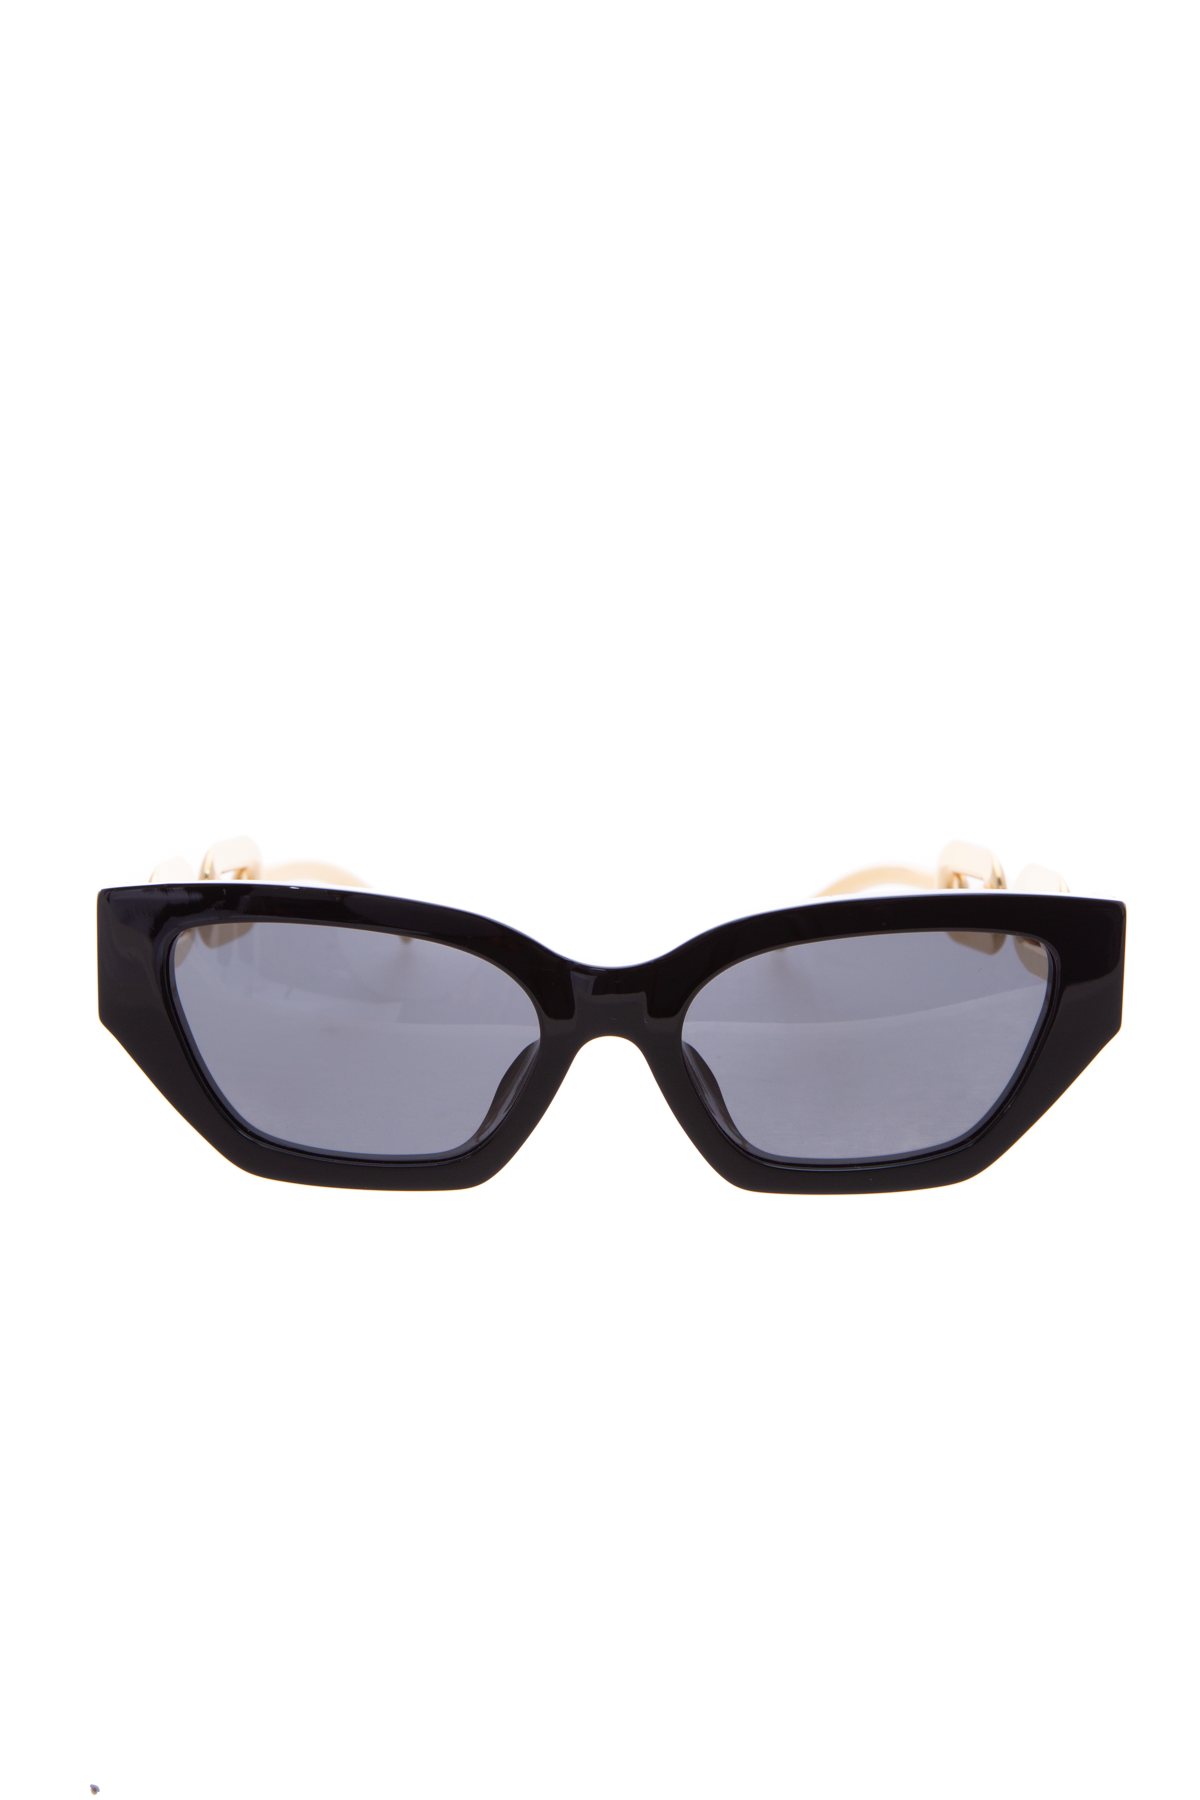 Louis Vuitton Black Edge Sunglasses